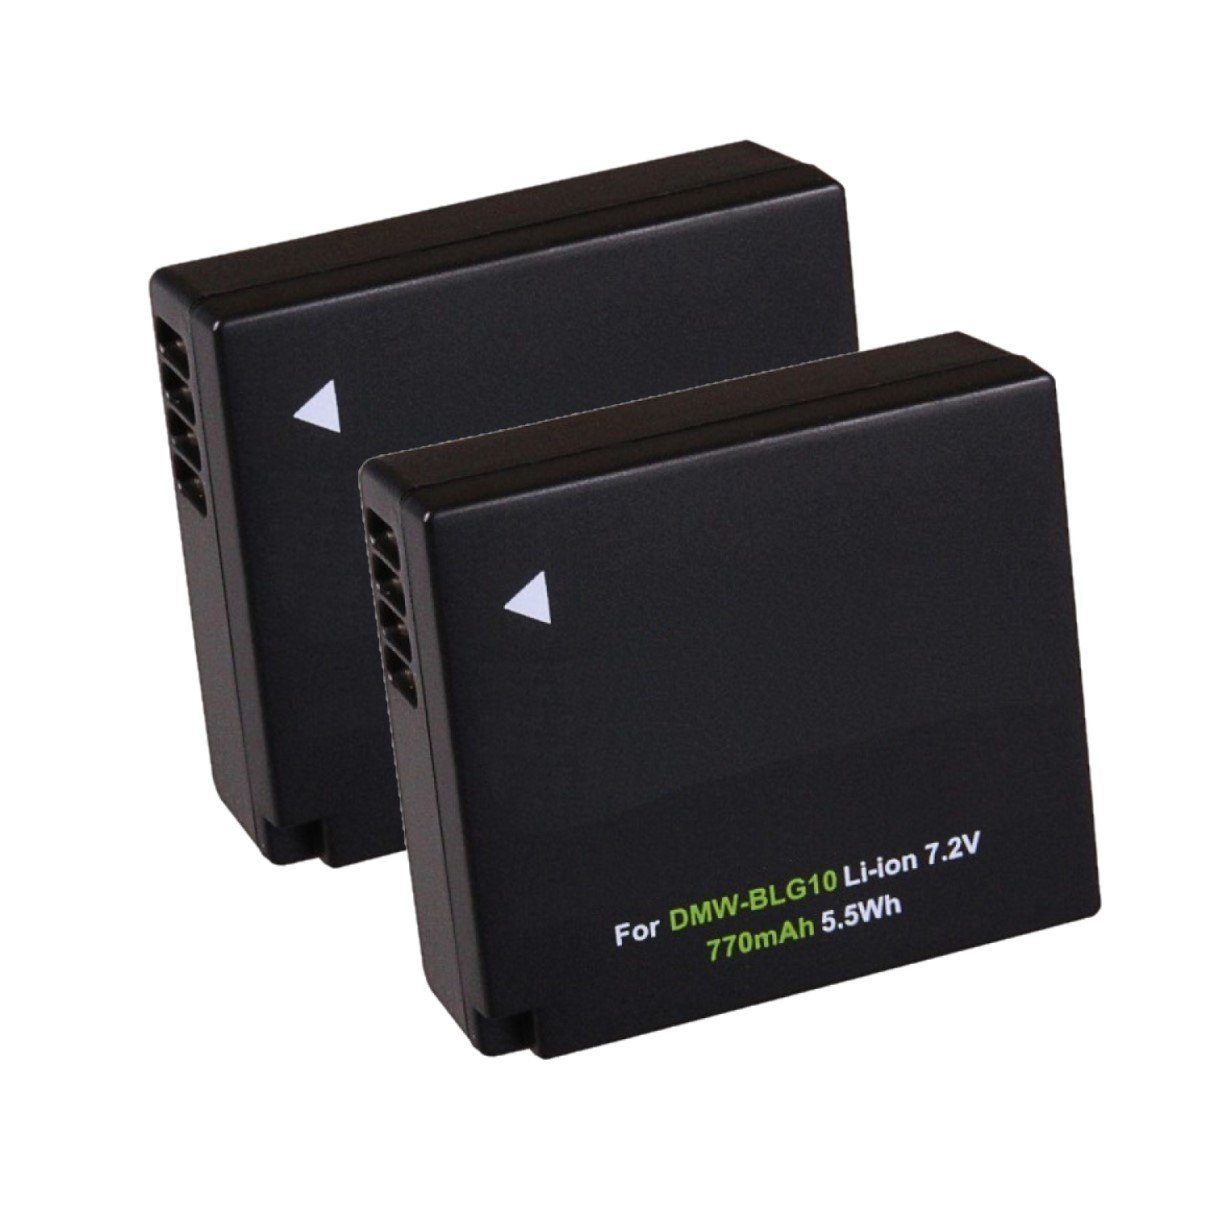 GOLDBATT 2x Akku für Panasonic DMC-GF6 DMW-BLG10 CS-BLG10MC DMWBLE9 Lumix DC-TX2 DMCGF3 DMCS6K Kamera-Akku Ersatzakku 7700 mAh (7,2 V, 2 St), 100% kompatibel mit den Original Akkus durch maßgefertigte Passform inklusive Überhitzungsschutz